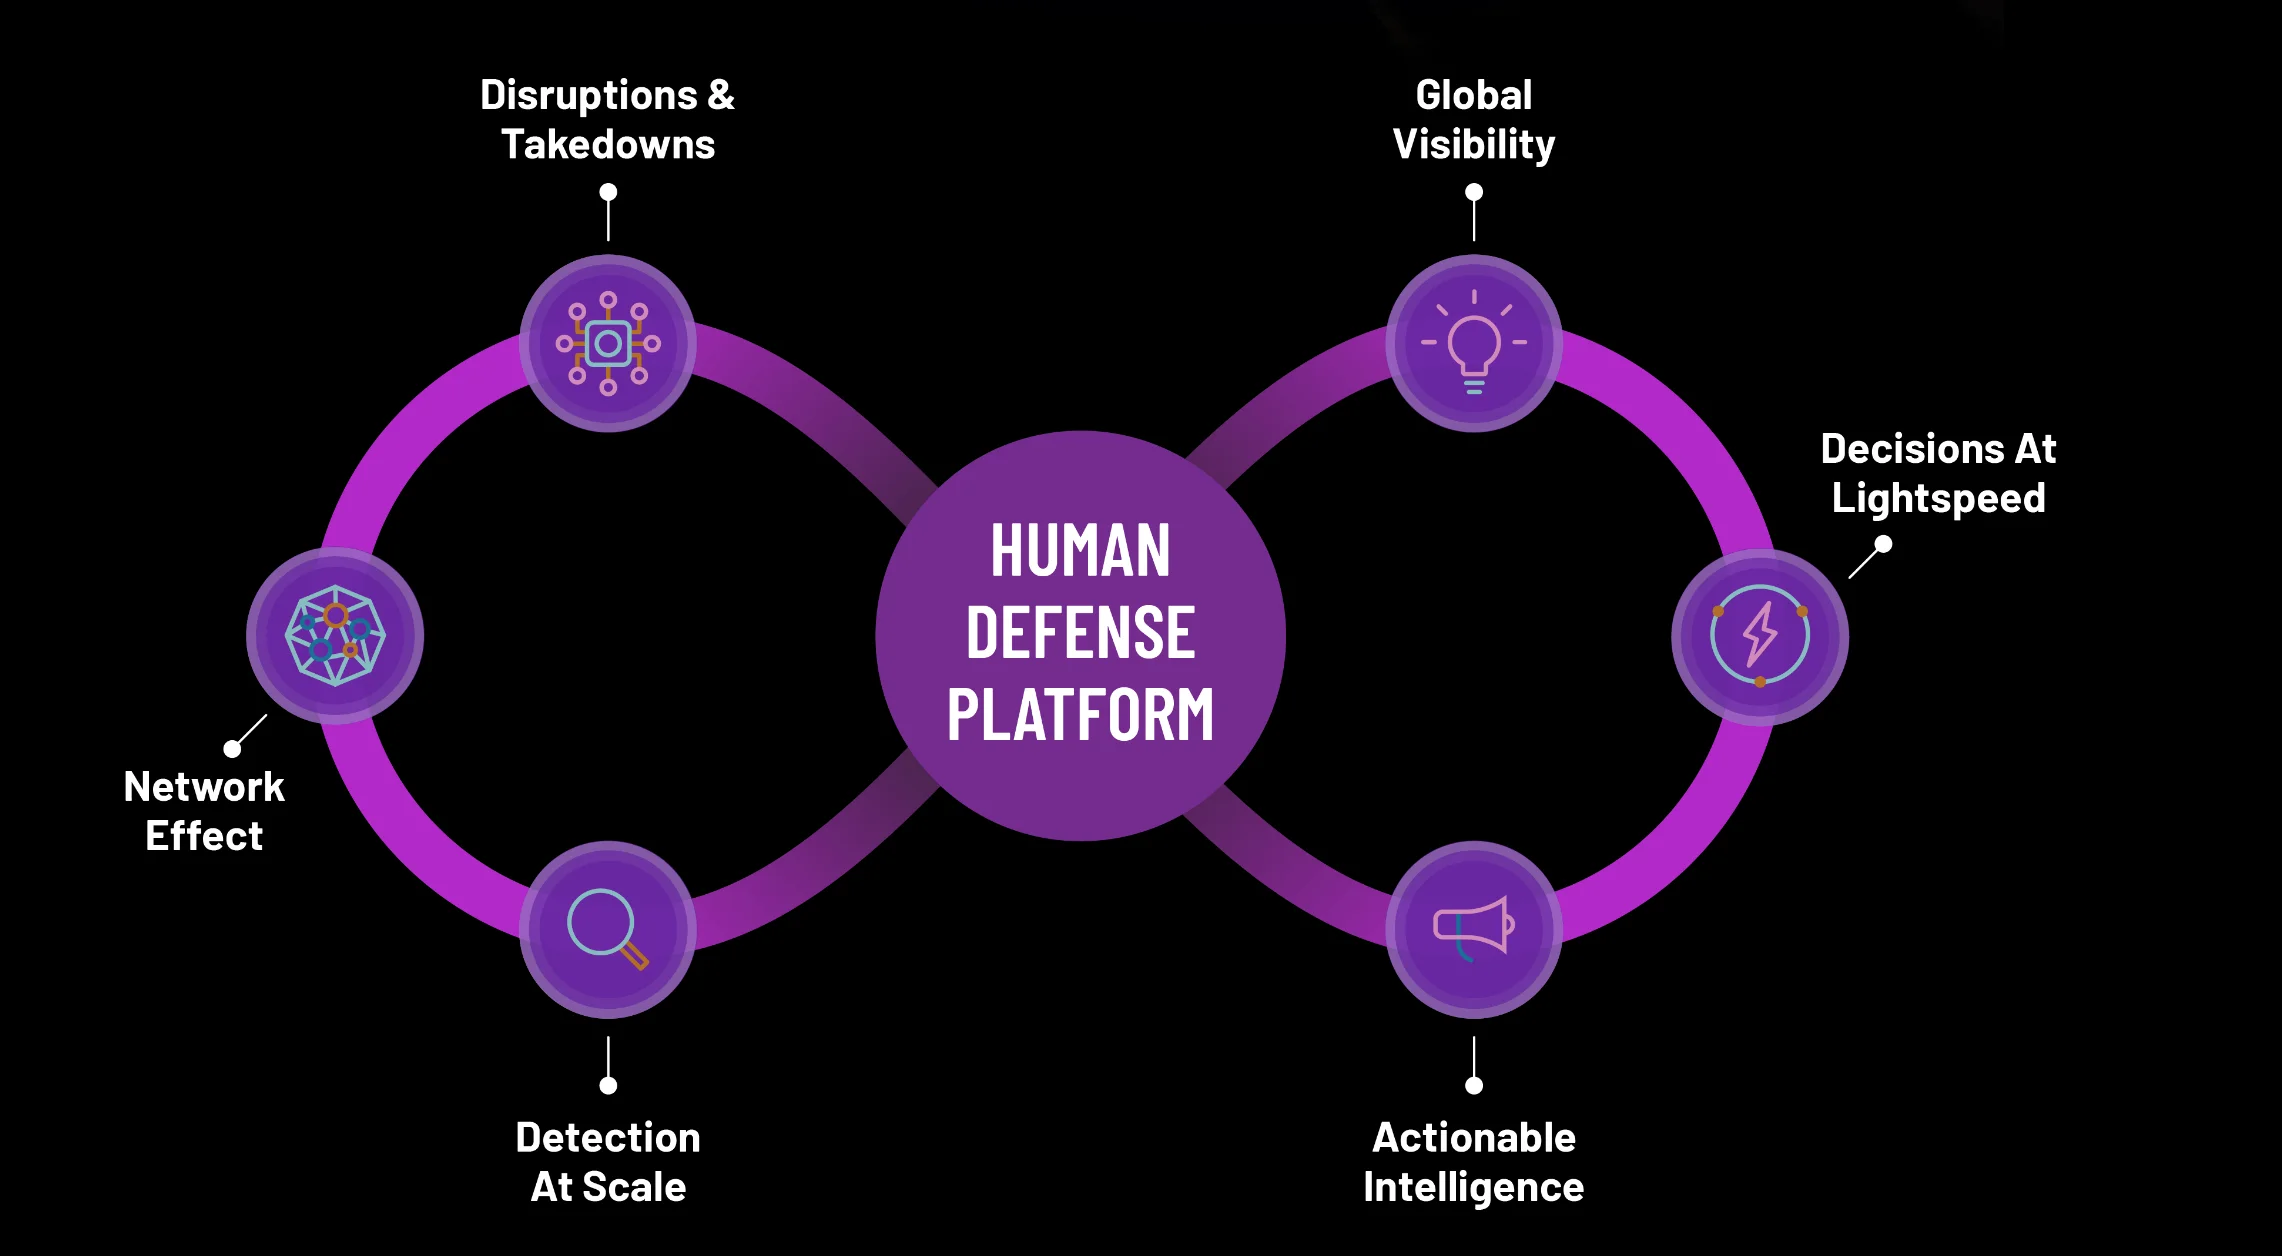 Human Defense Platform